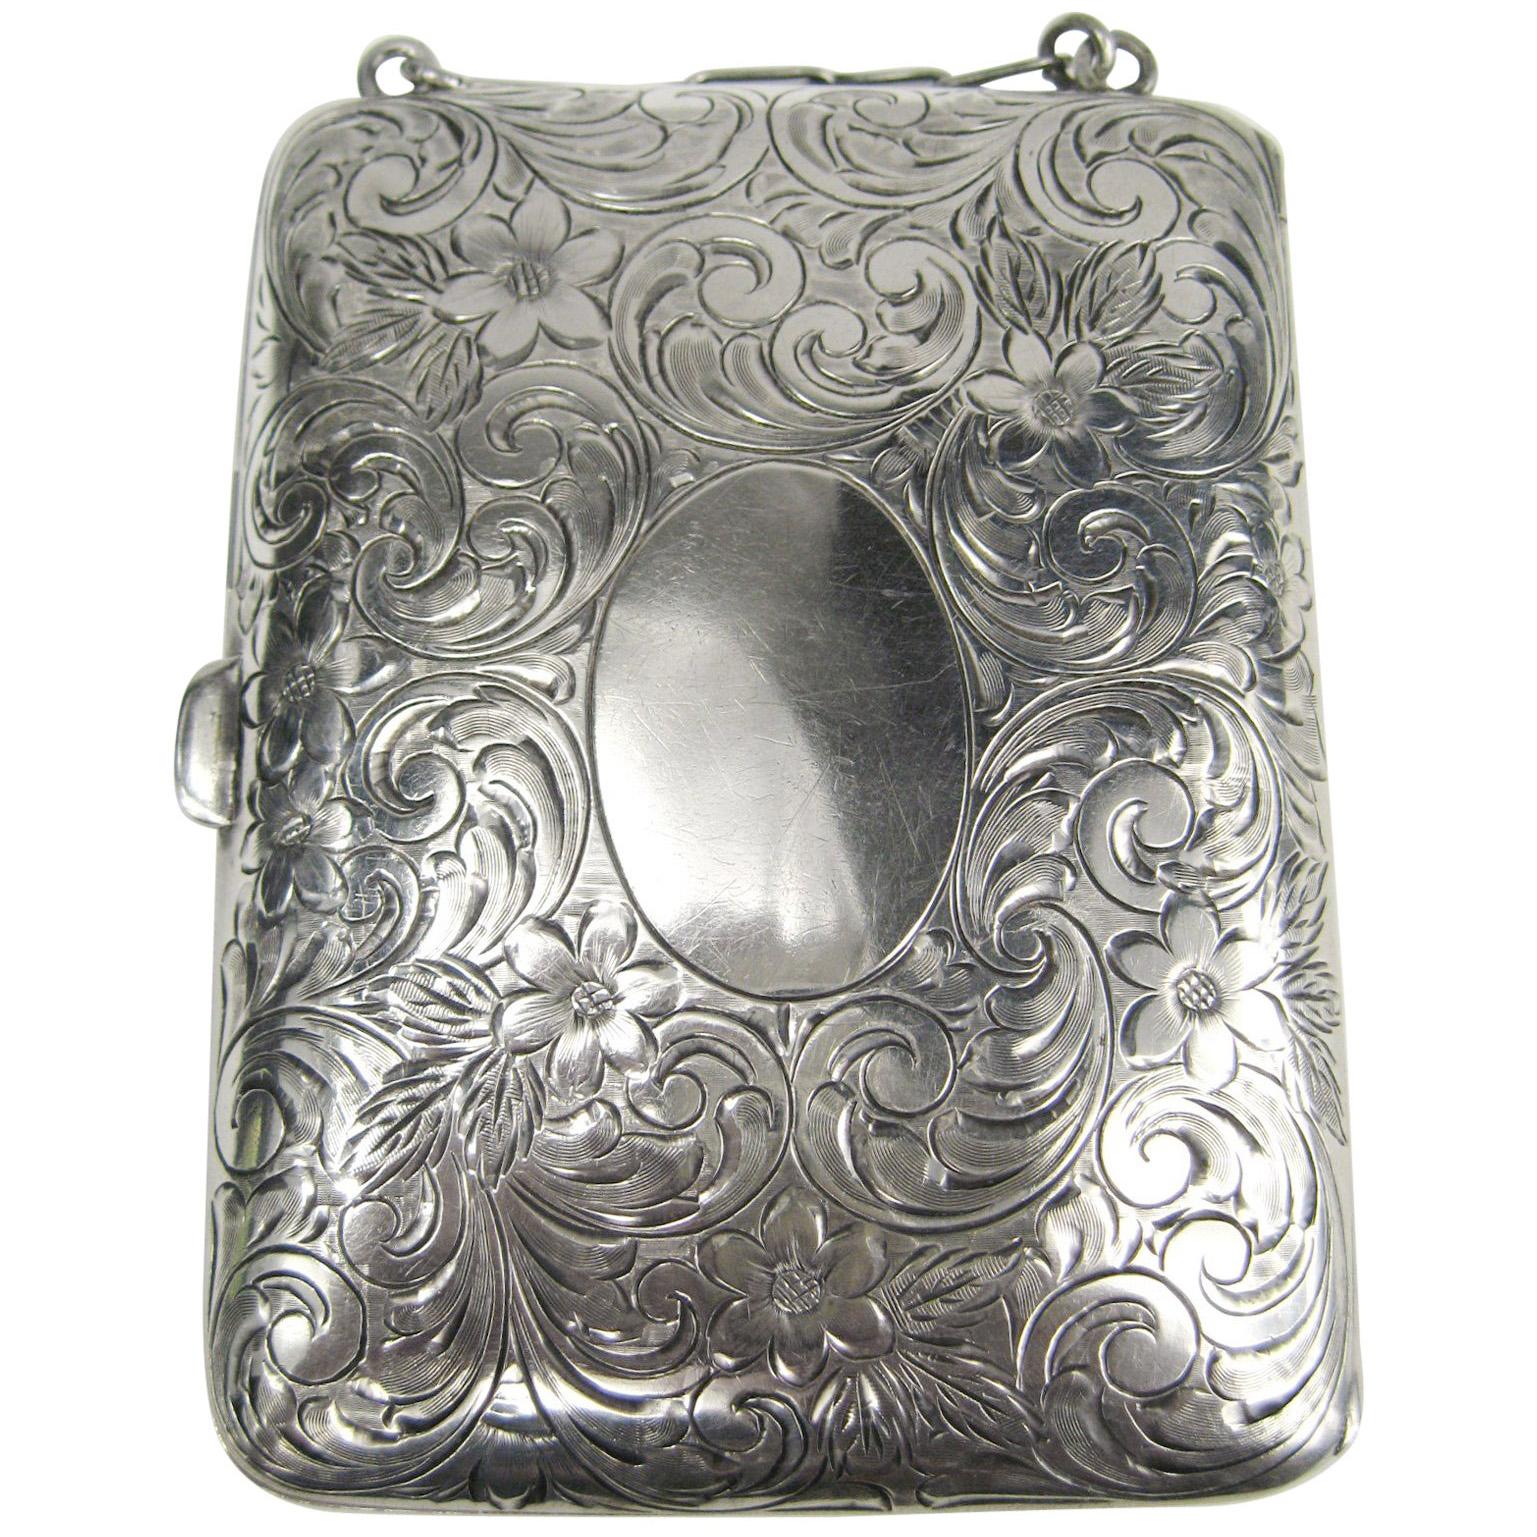 Antique Sterling Silver Mirror Card Coin Purse Compact Case nécessaire